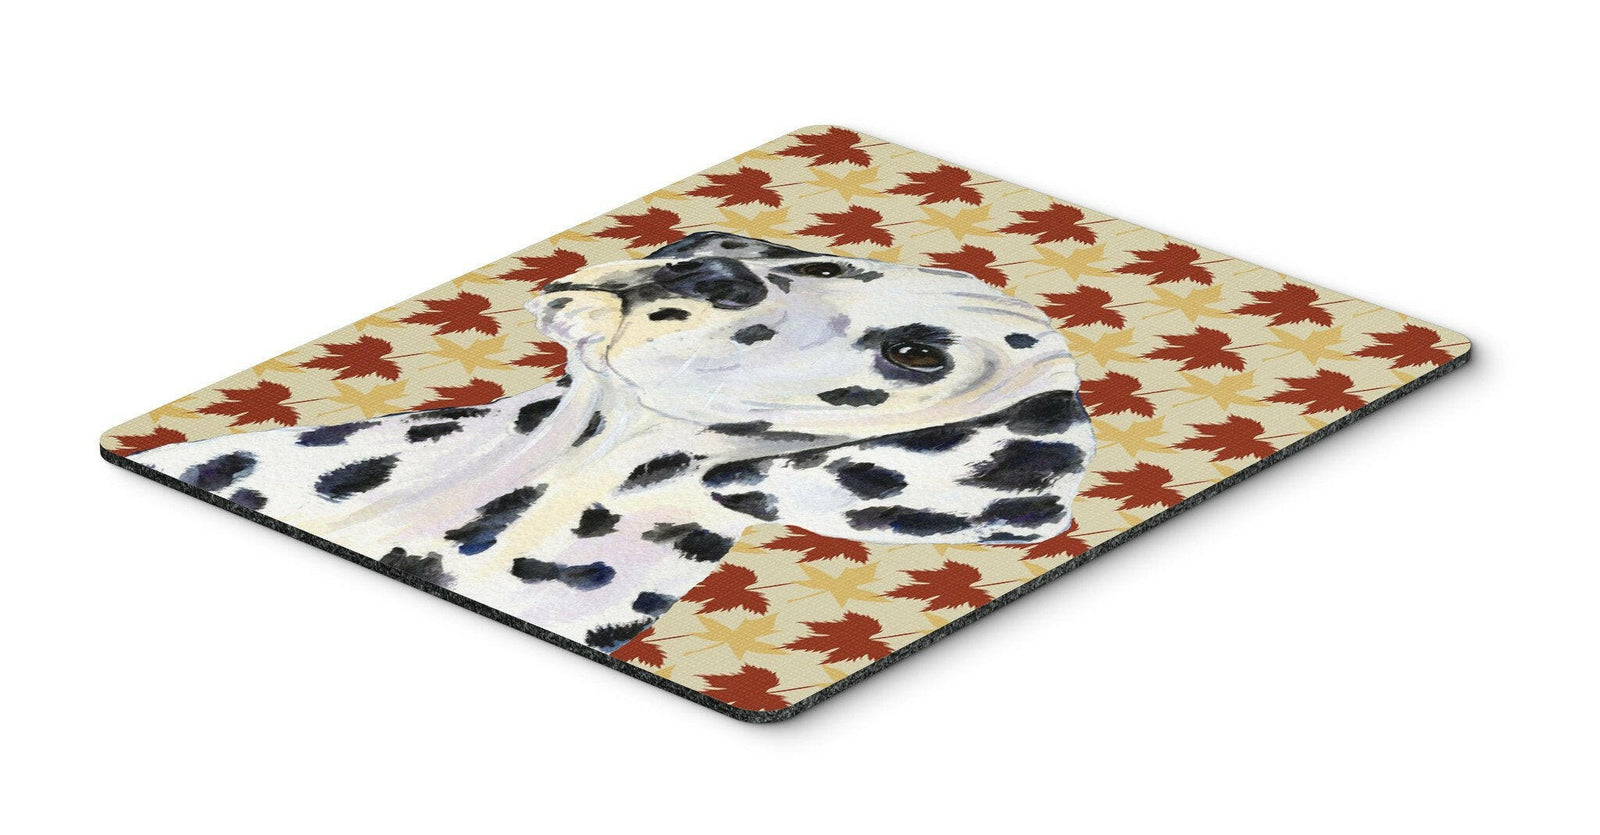 Dalmatian Fall Leaves Portrait Mouse Pad, Hot Pad or Trivet by Caroline's Treasures